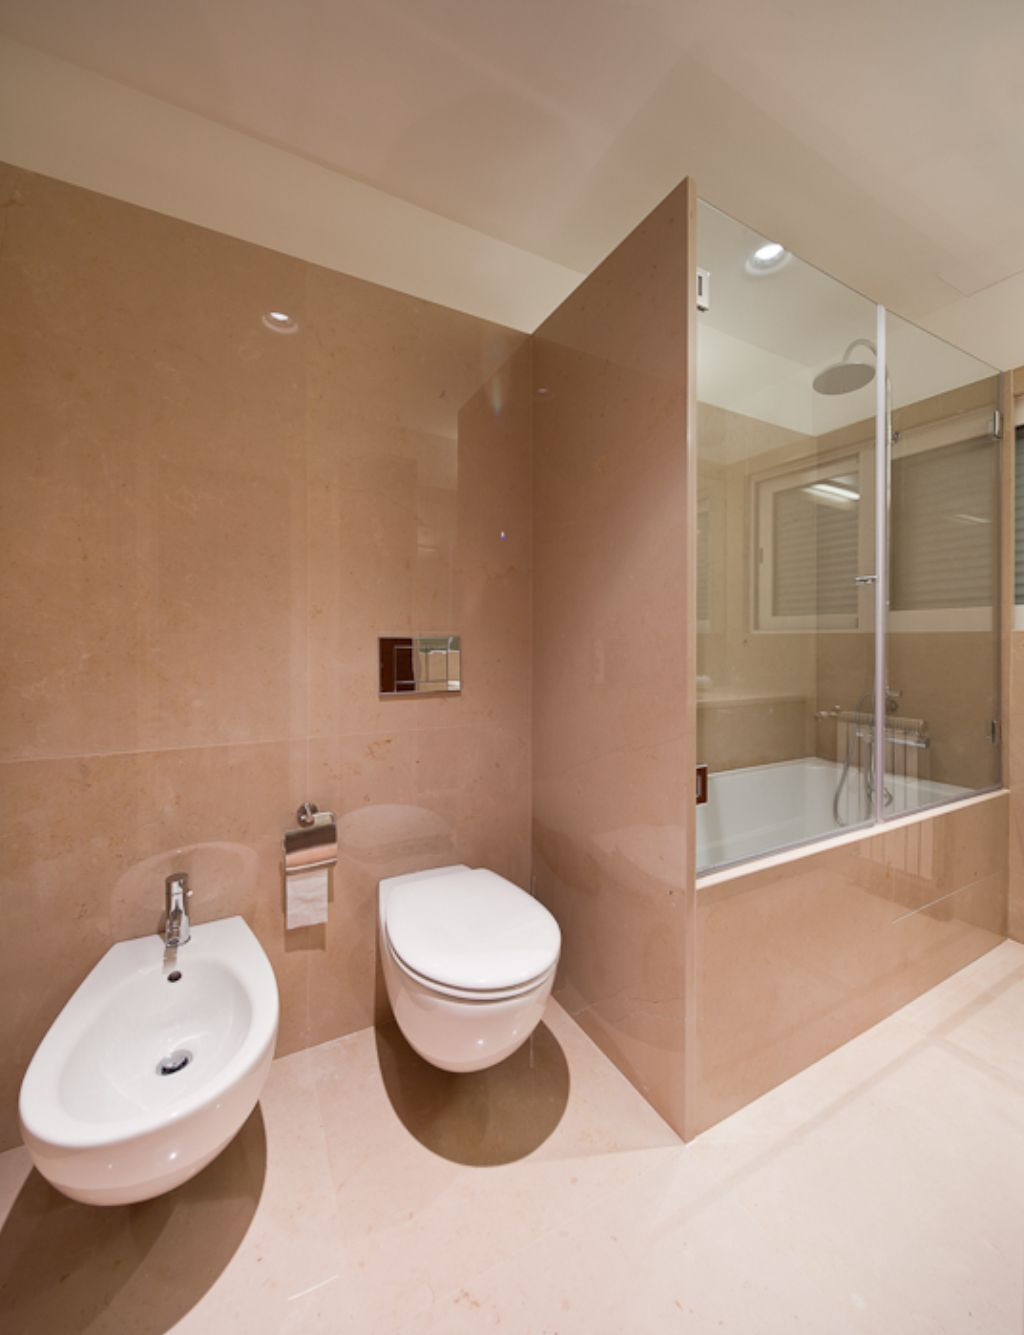 Apartment Bathroom Decorating Ideas
 Modern Minimalist Apartment Bathroom Interior Design with